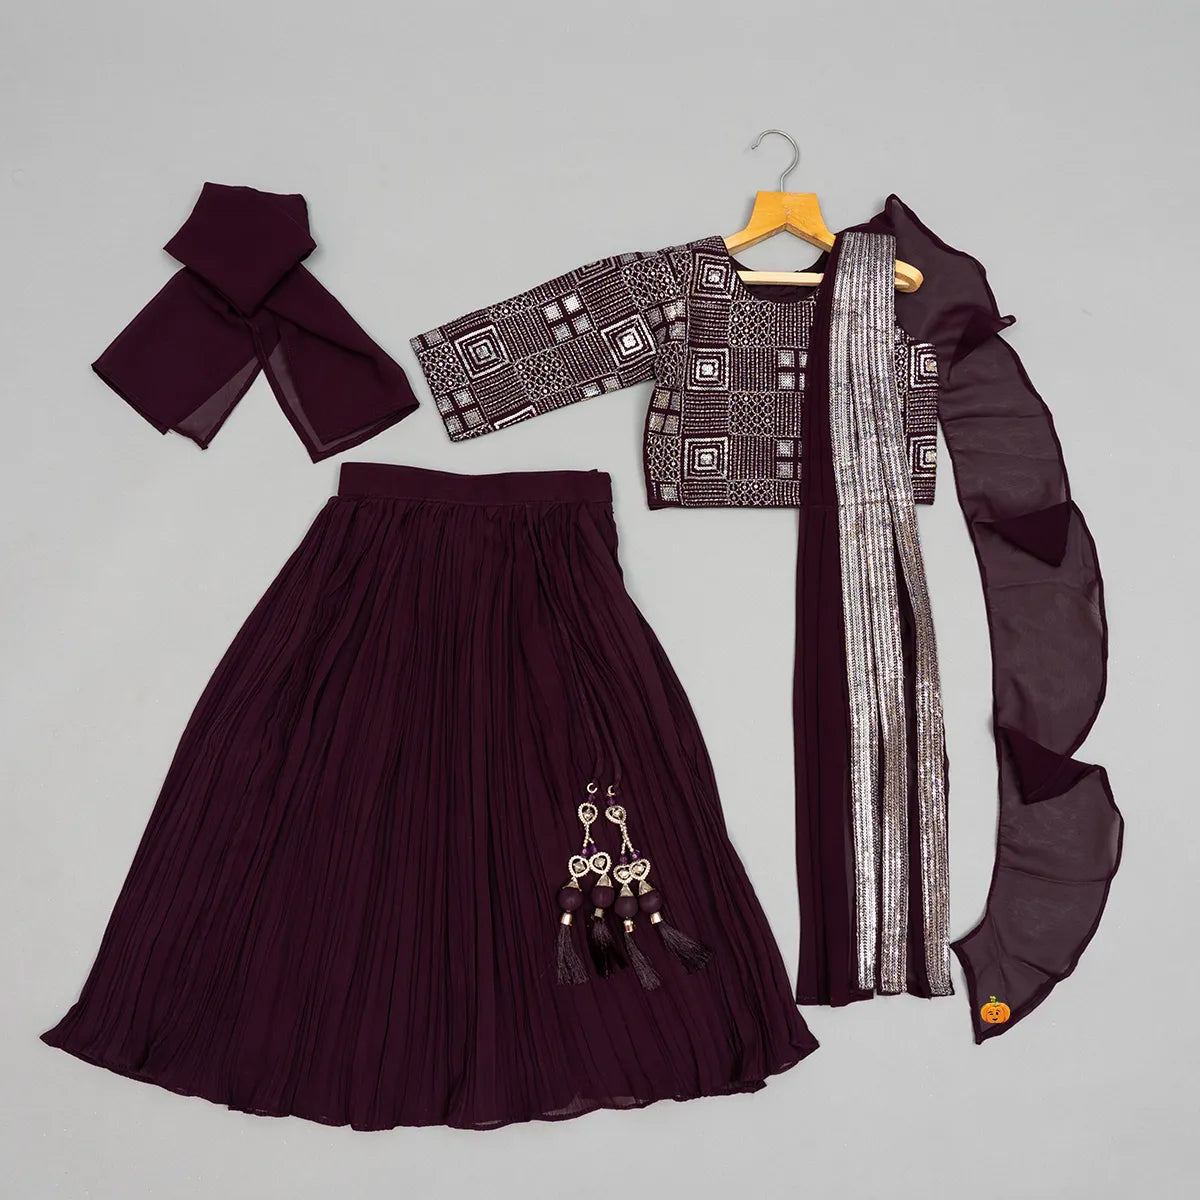 Lehenga Choli Designs for Kid Girls: All Party Wear Designs - YouTube